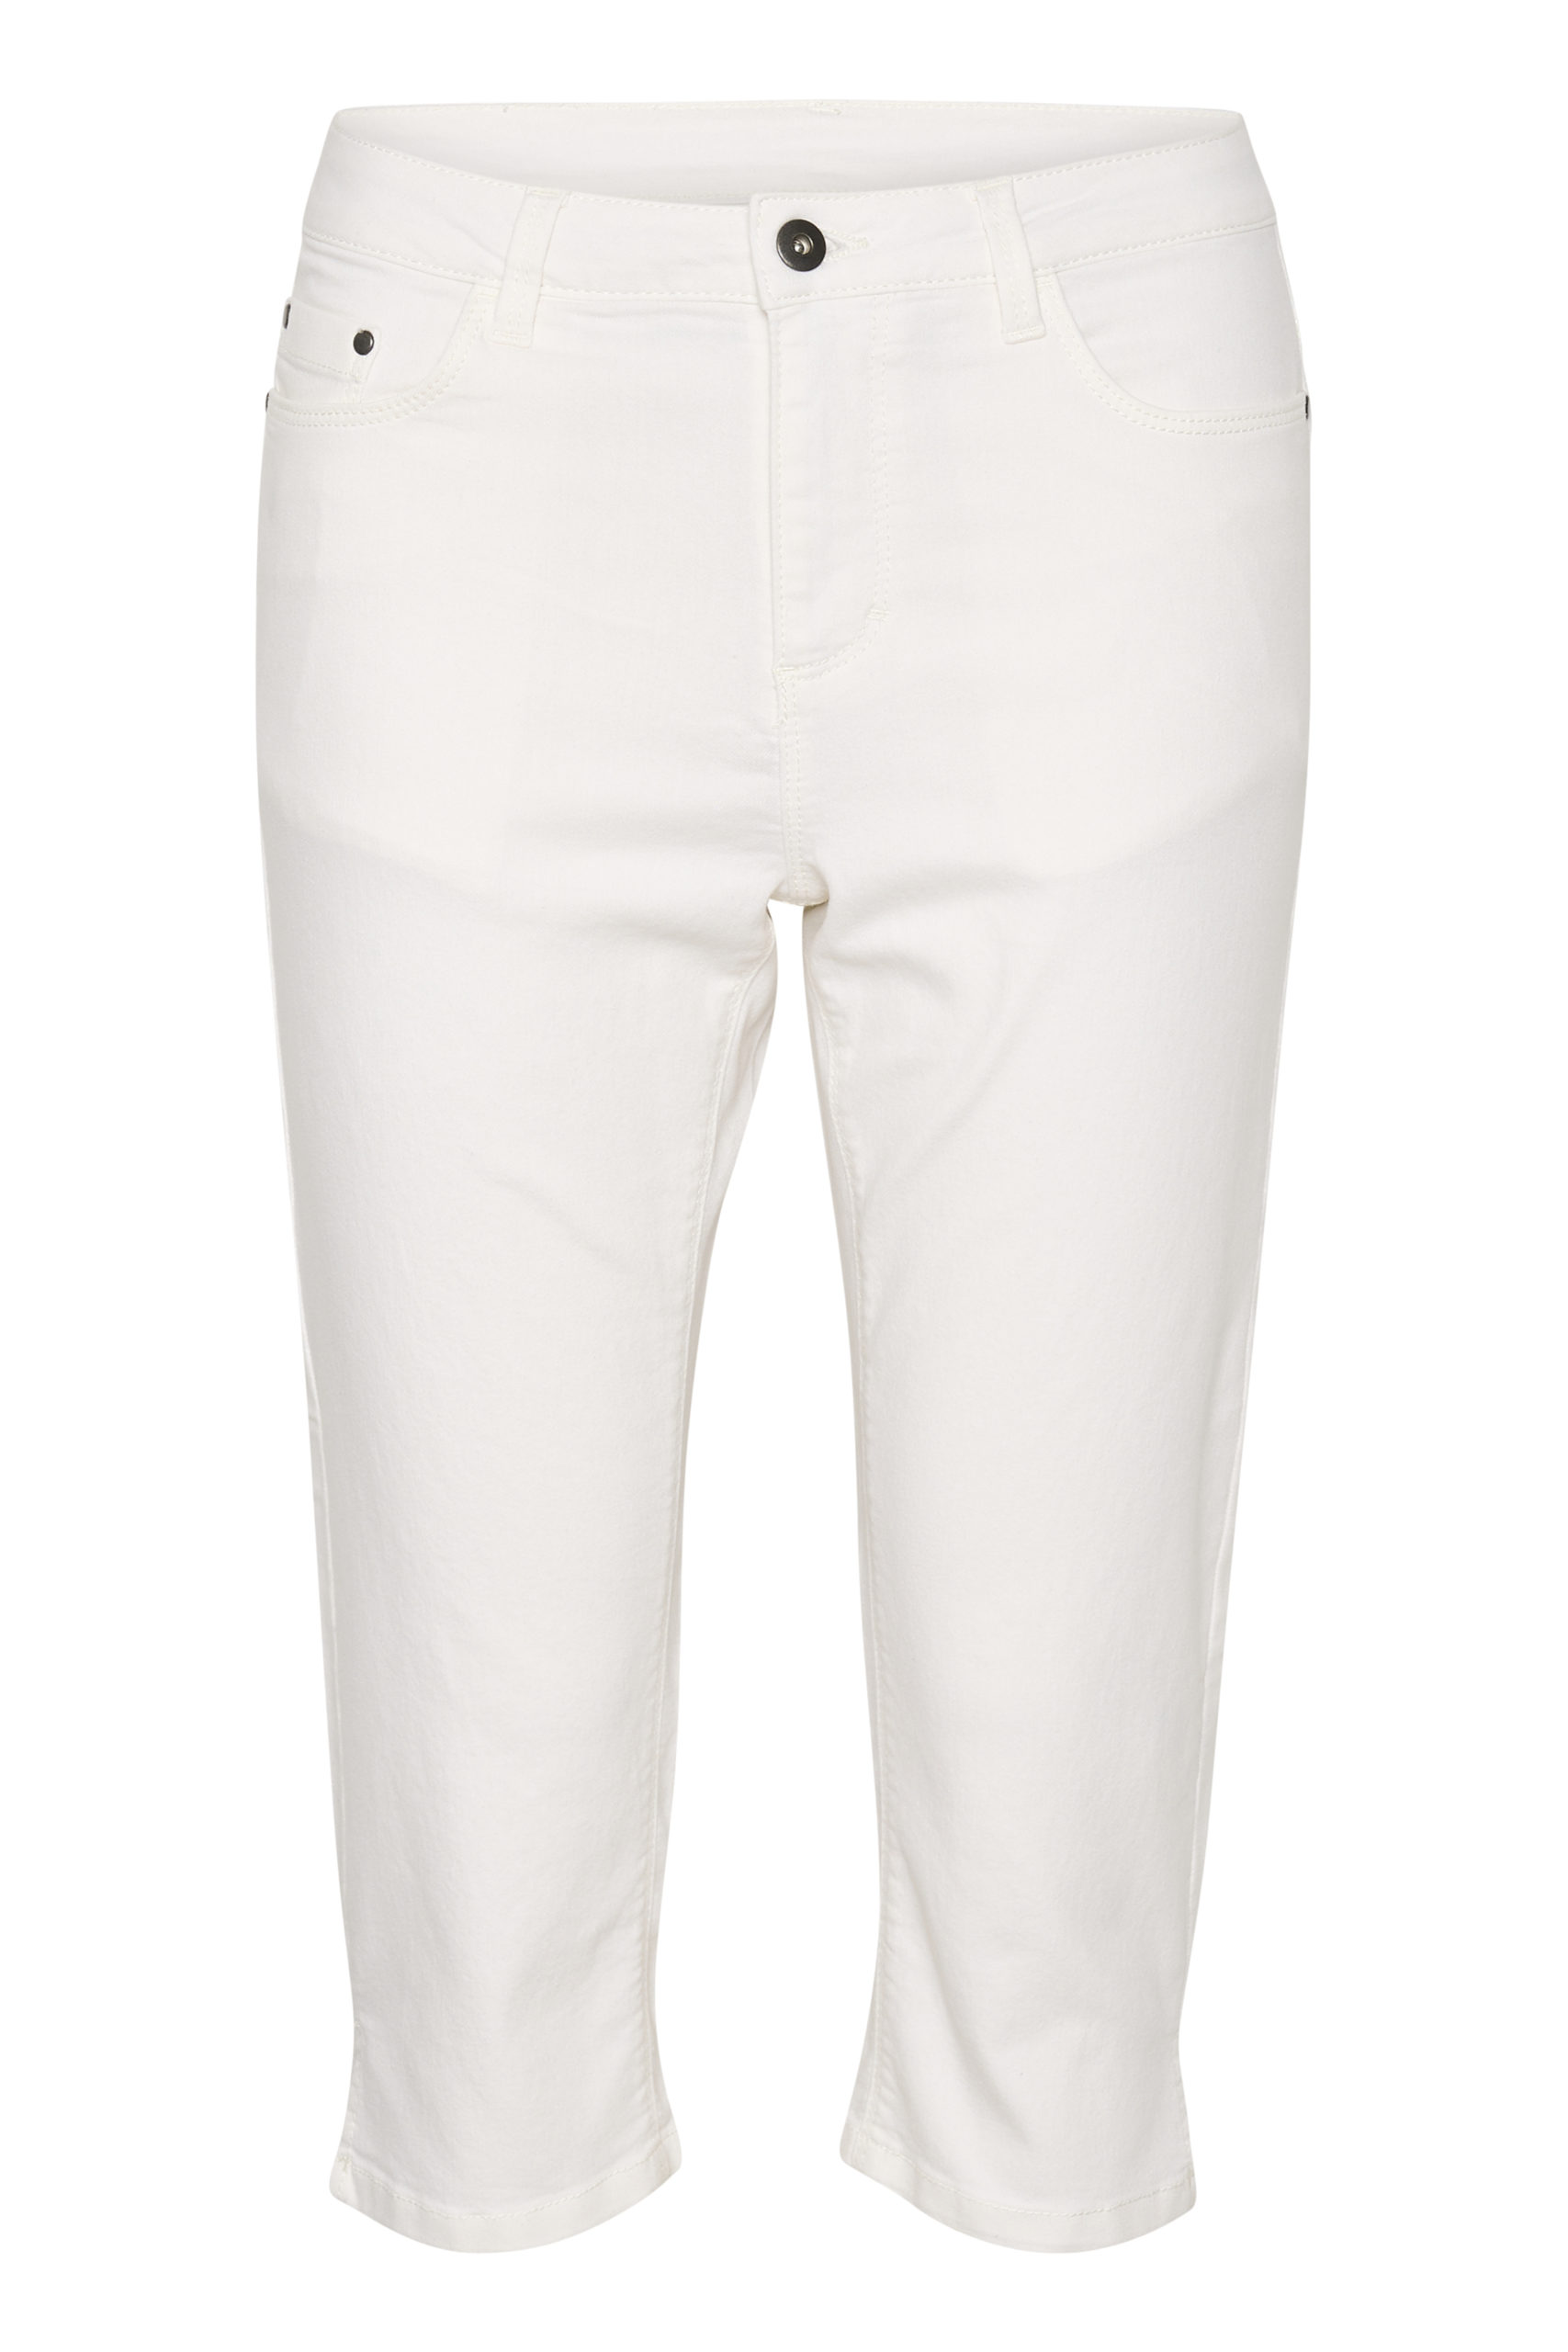 KAzelina Capri Jeans item front